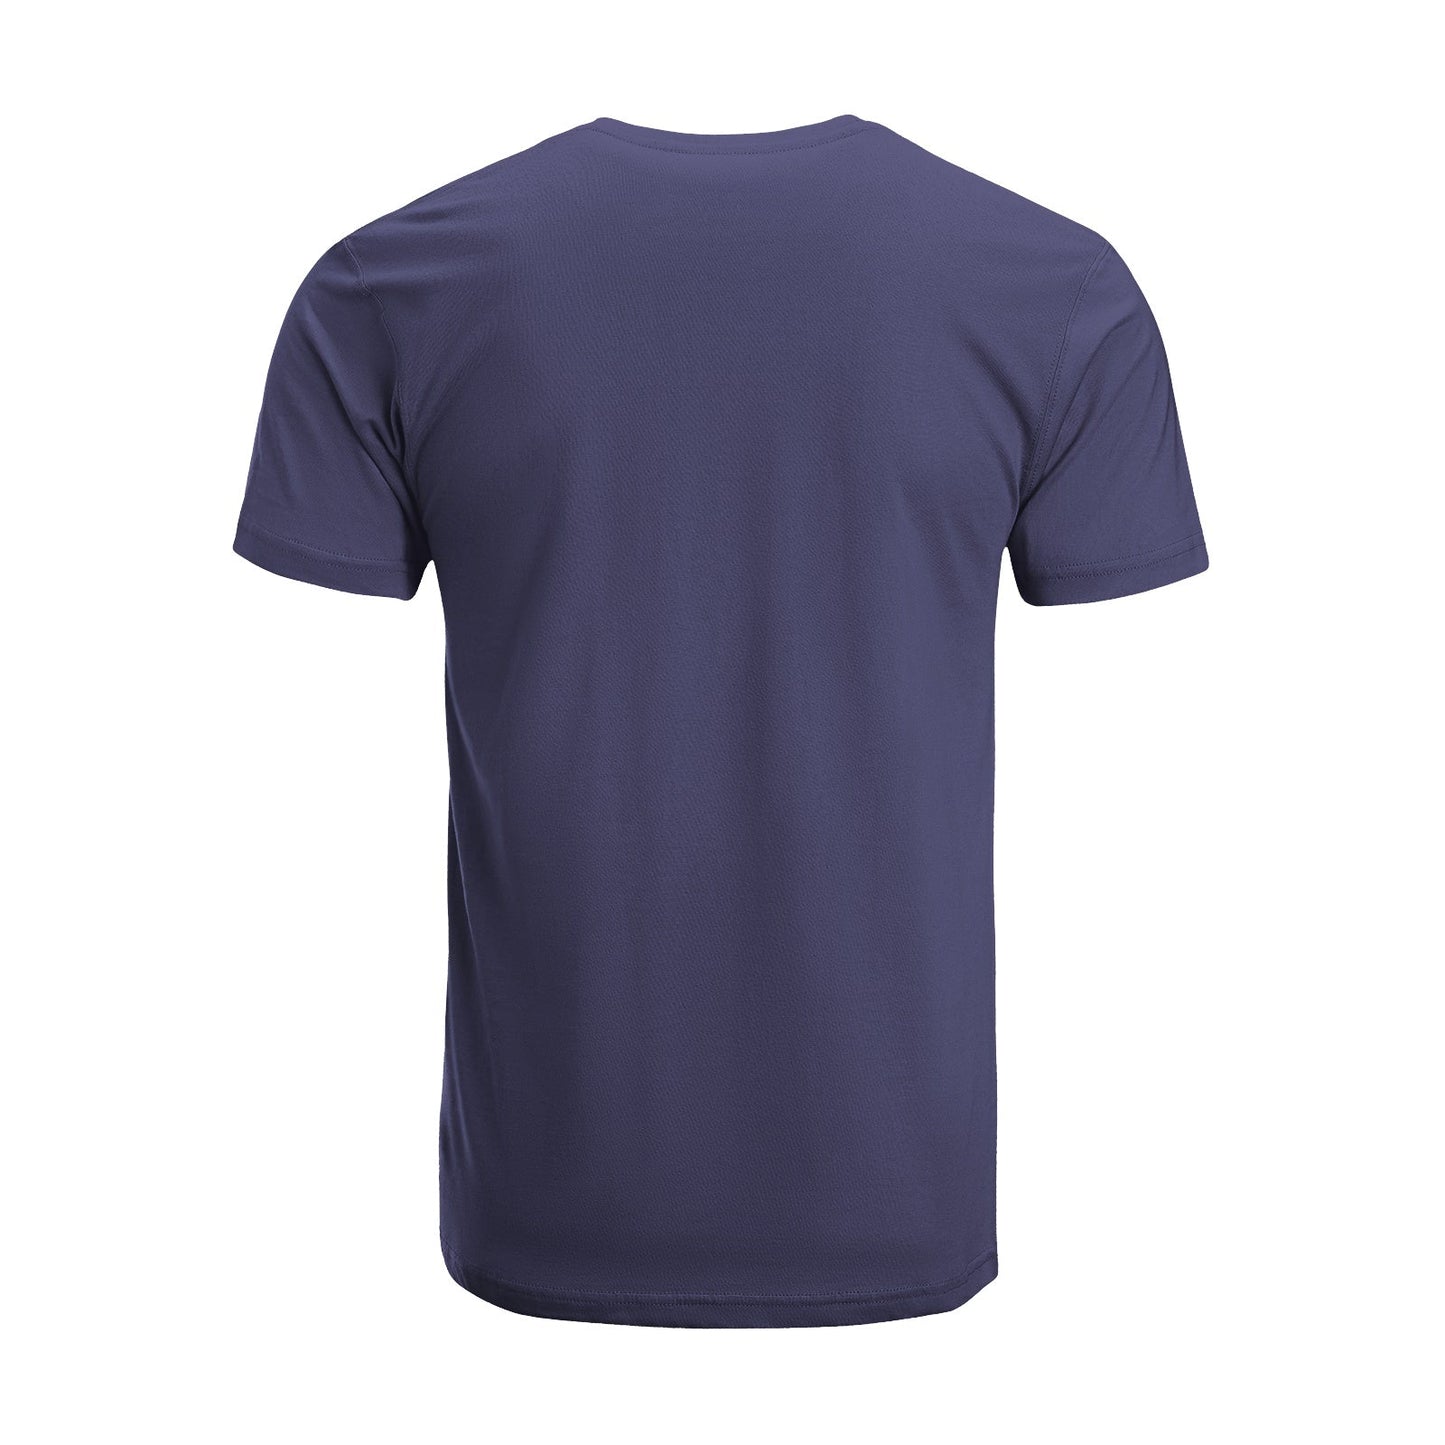 Unisex Short Sleeve Crew Neck Cotton Jersey T-Shirt USA 02